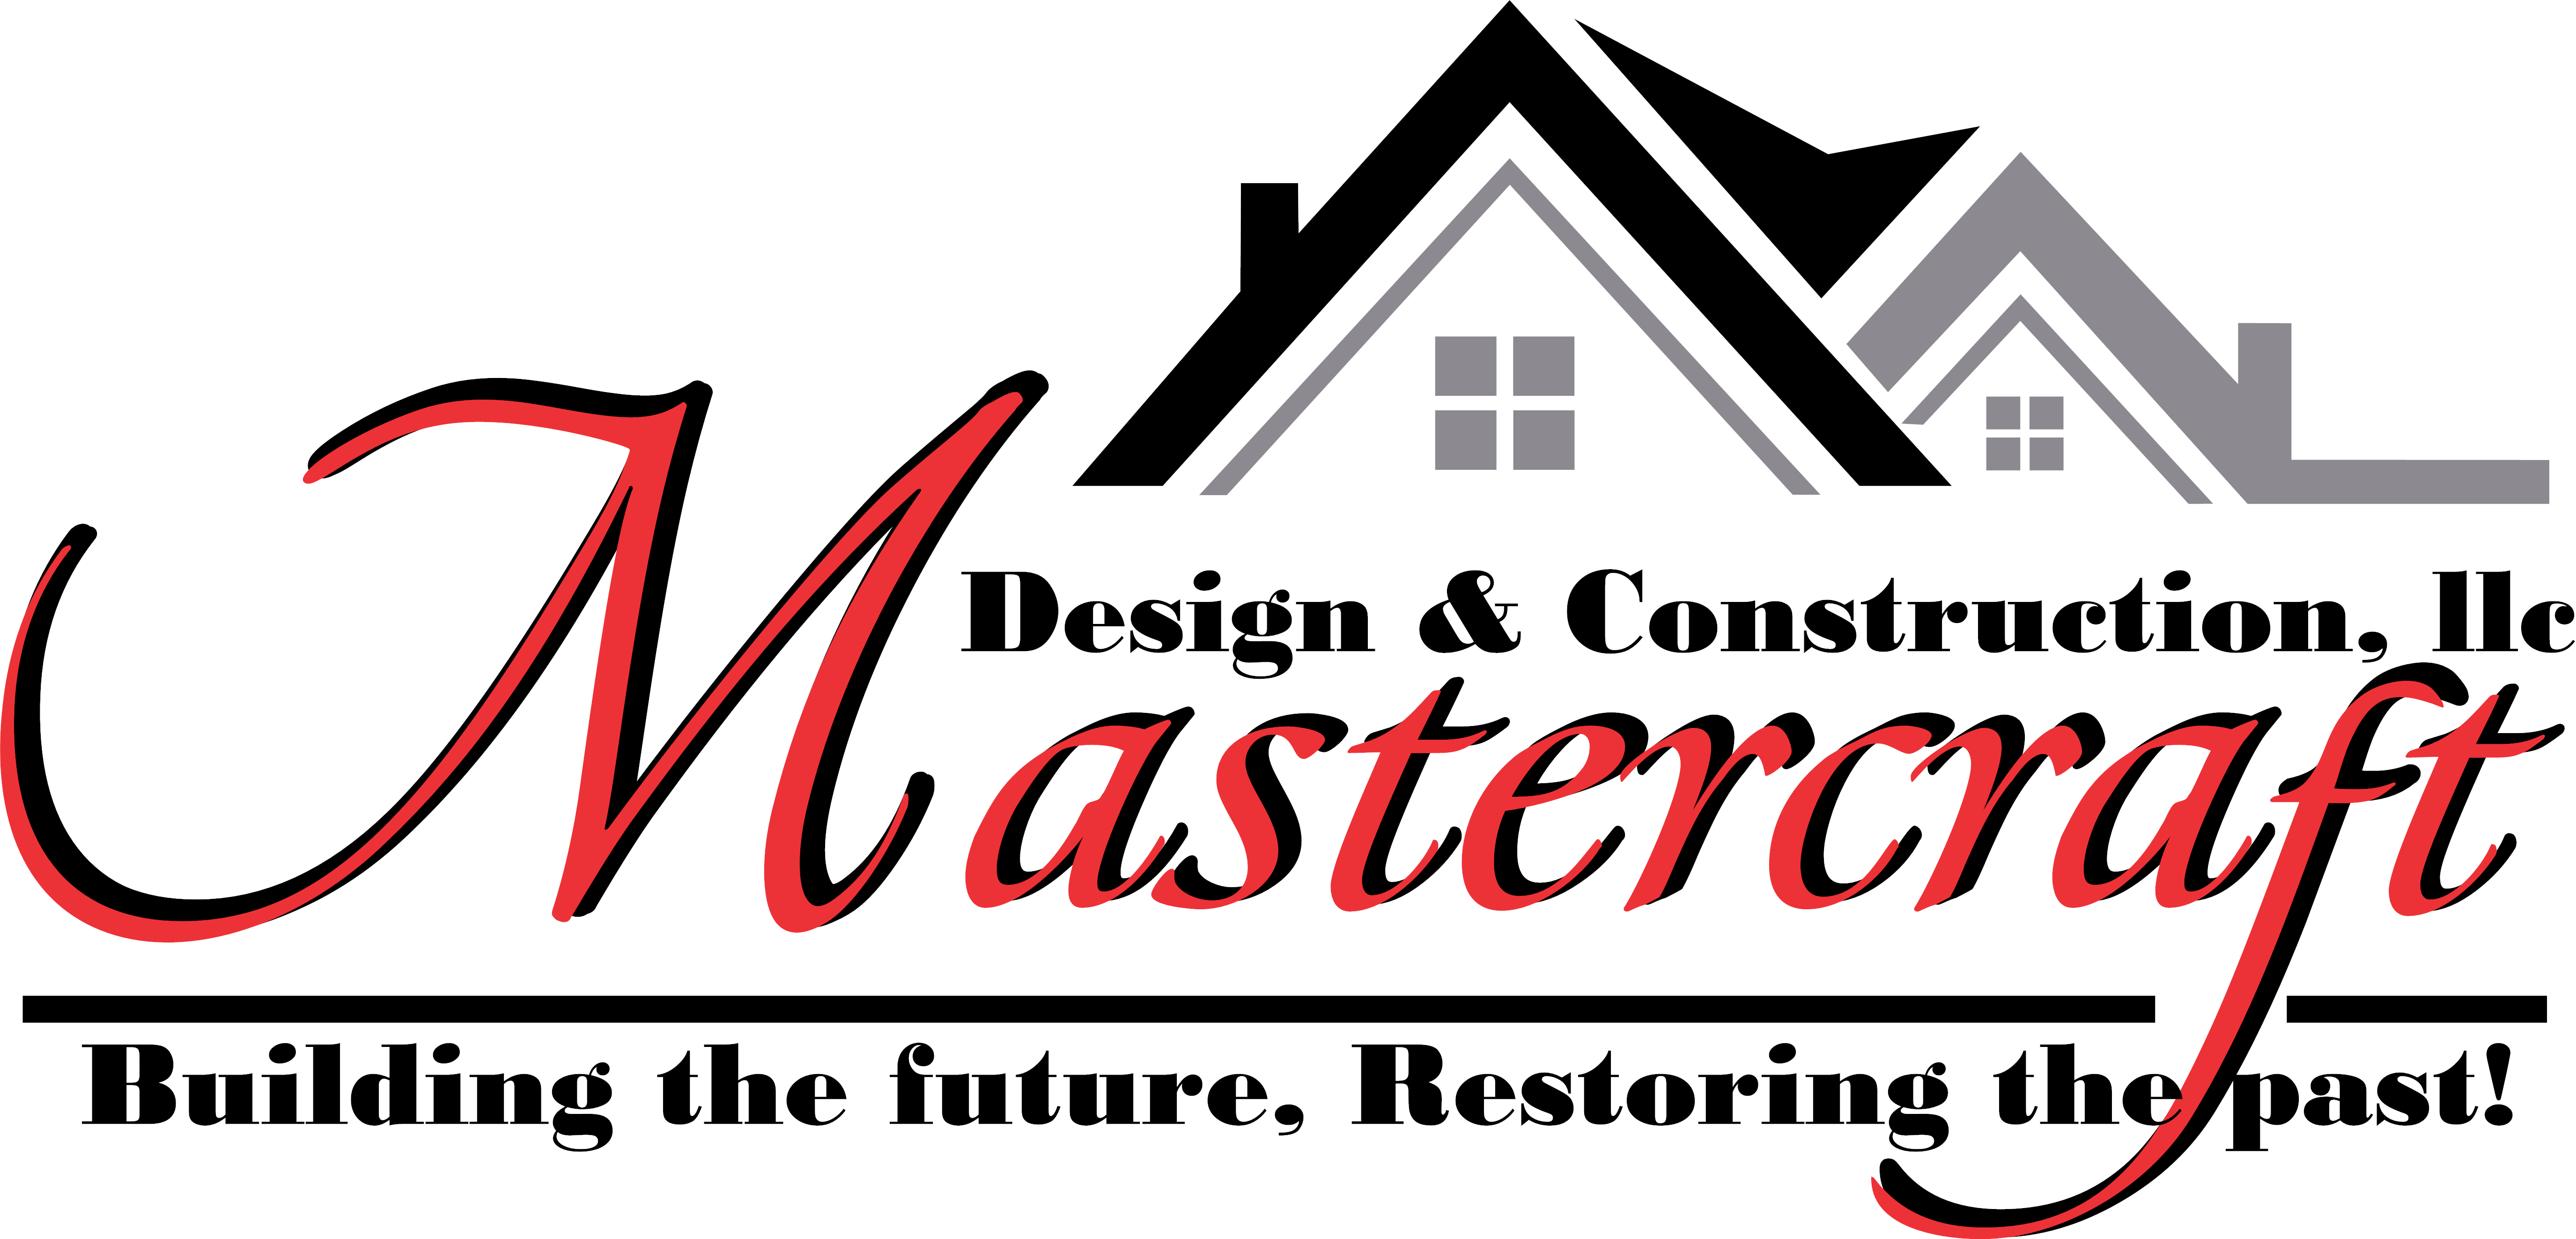 Mastercraft Design and Construction logo